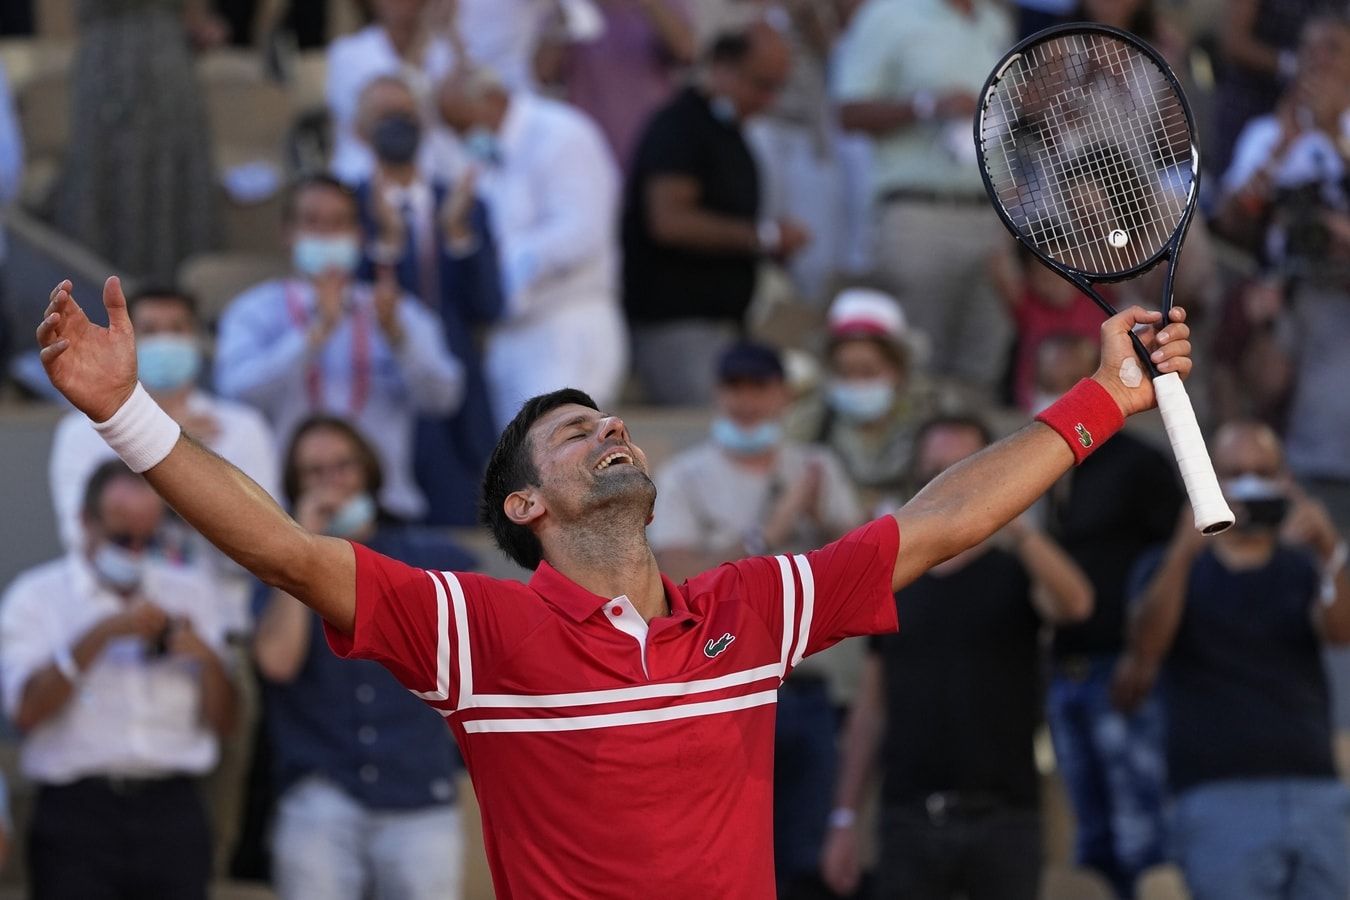 French Open 2021 Final Highlights: Djokovic Beats Tsitsipas In Five Set Thriller To Win 2nd Roland Garros Title